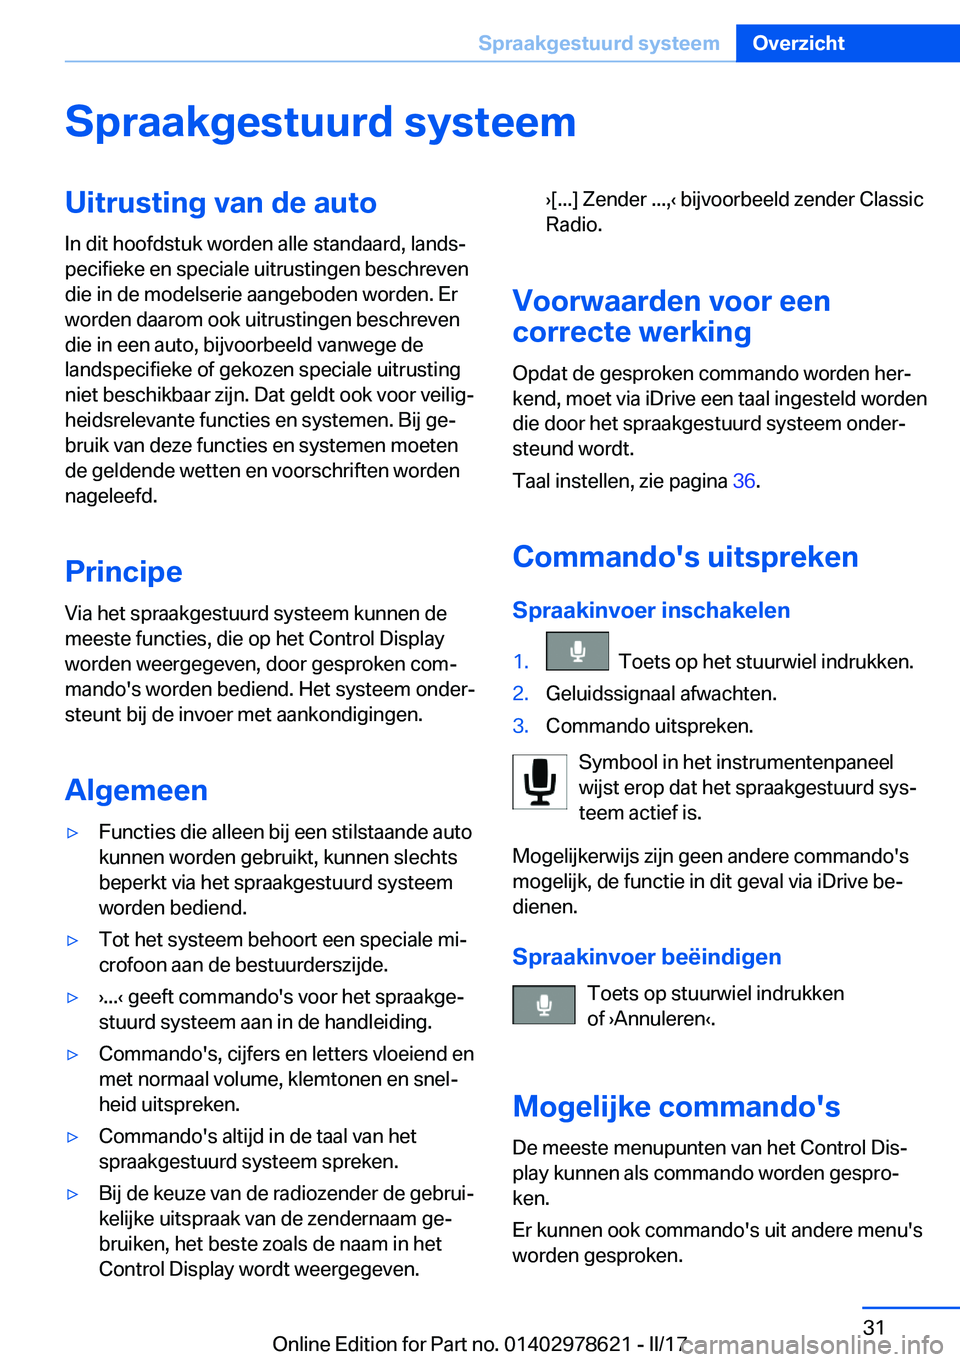 BMW 7 SERIES 2018  Instructieboekjes (in Dutch) �S�p�r�a�a�k�g�e�s�t�u�u�r�d��s�y�s�t�e�e�m�U�i�t�r�u�s�t�i�n�g��v�a�n��d�e��a�u�t�o�I�n� �d�i�t� �h�o�o�f�d�s�t�u�k� �w�o�r�d�e�n� �a�l�l�e� �s�t�a�n�d�a�a�r�d�,� �l�a�n�d�sj
�p�e�c�i�f�i�e�k�e�